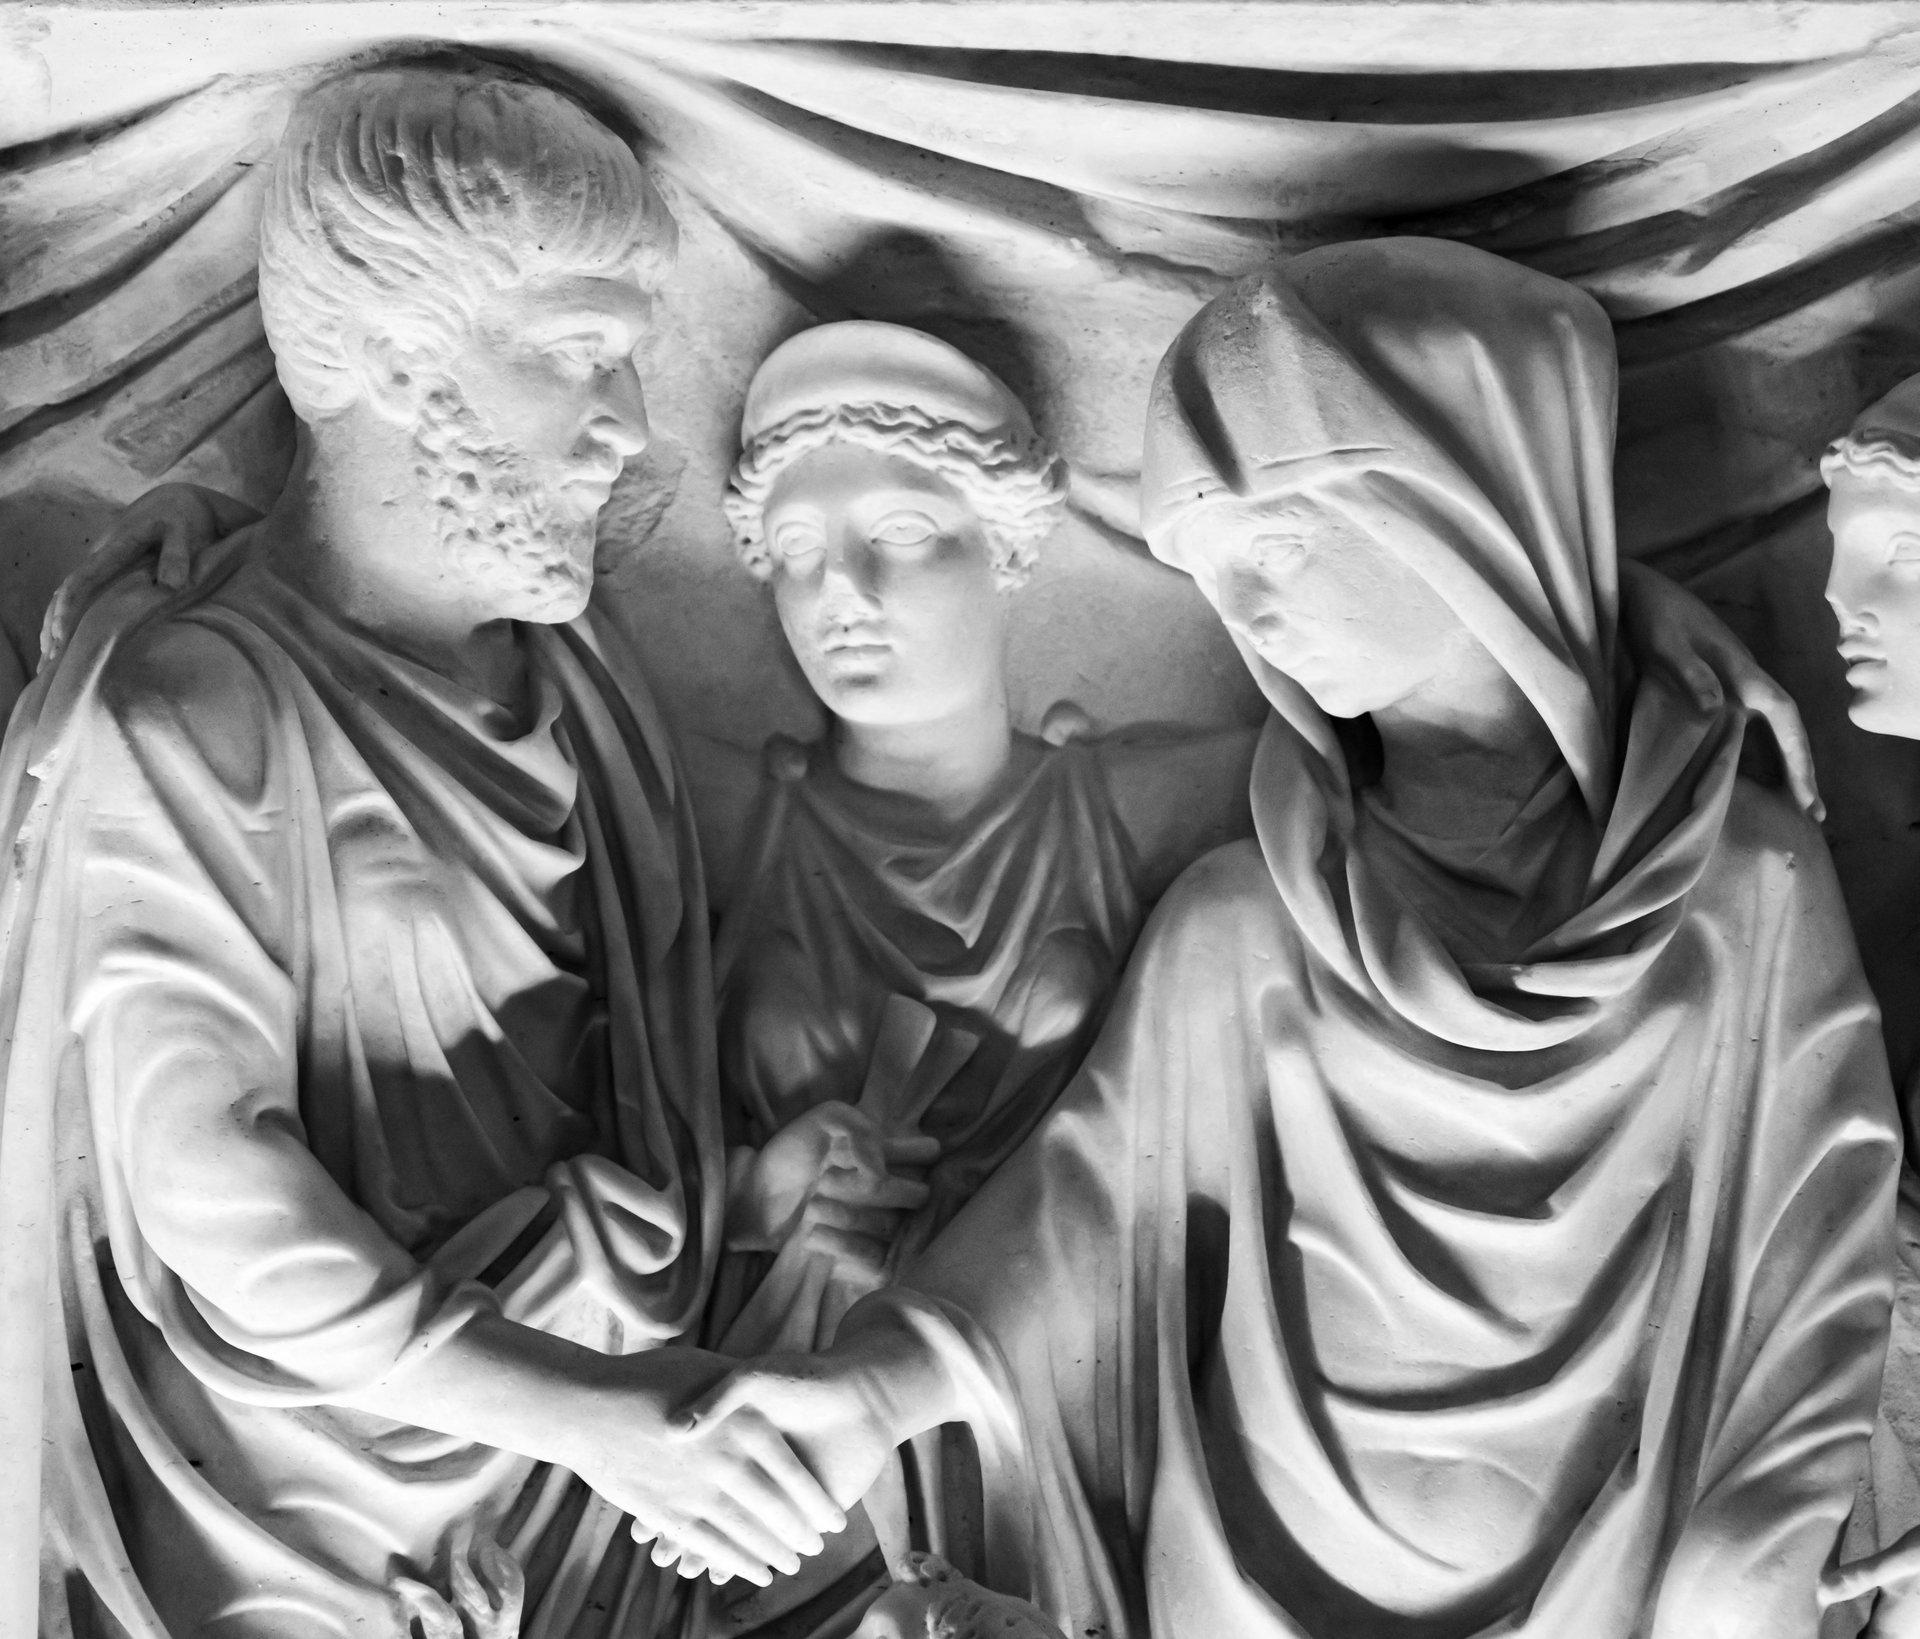 Sculpture of three people